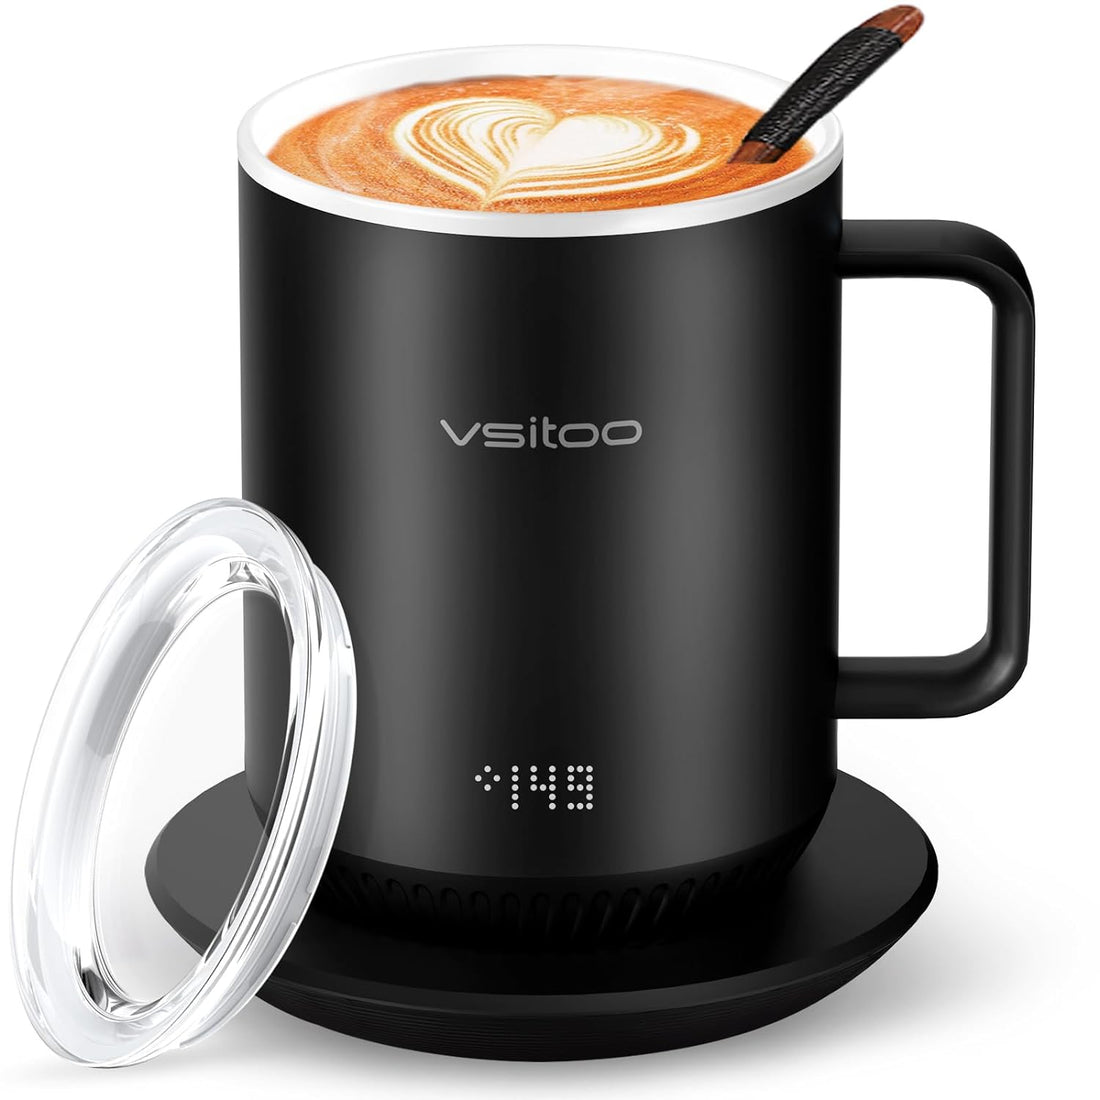 vsitoo Temperature Control Smart Mug 2 - Keep Your Coffee Hot All Day, Self Heating Coffee Mug with LED Display, 10 oz, 90 Min Battery Life - App&Manual Controlled Heated Coffee Mug - Coffee Gifts